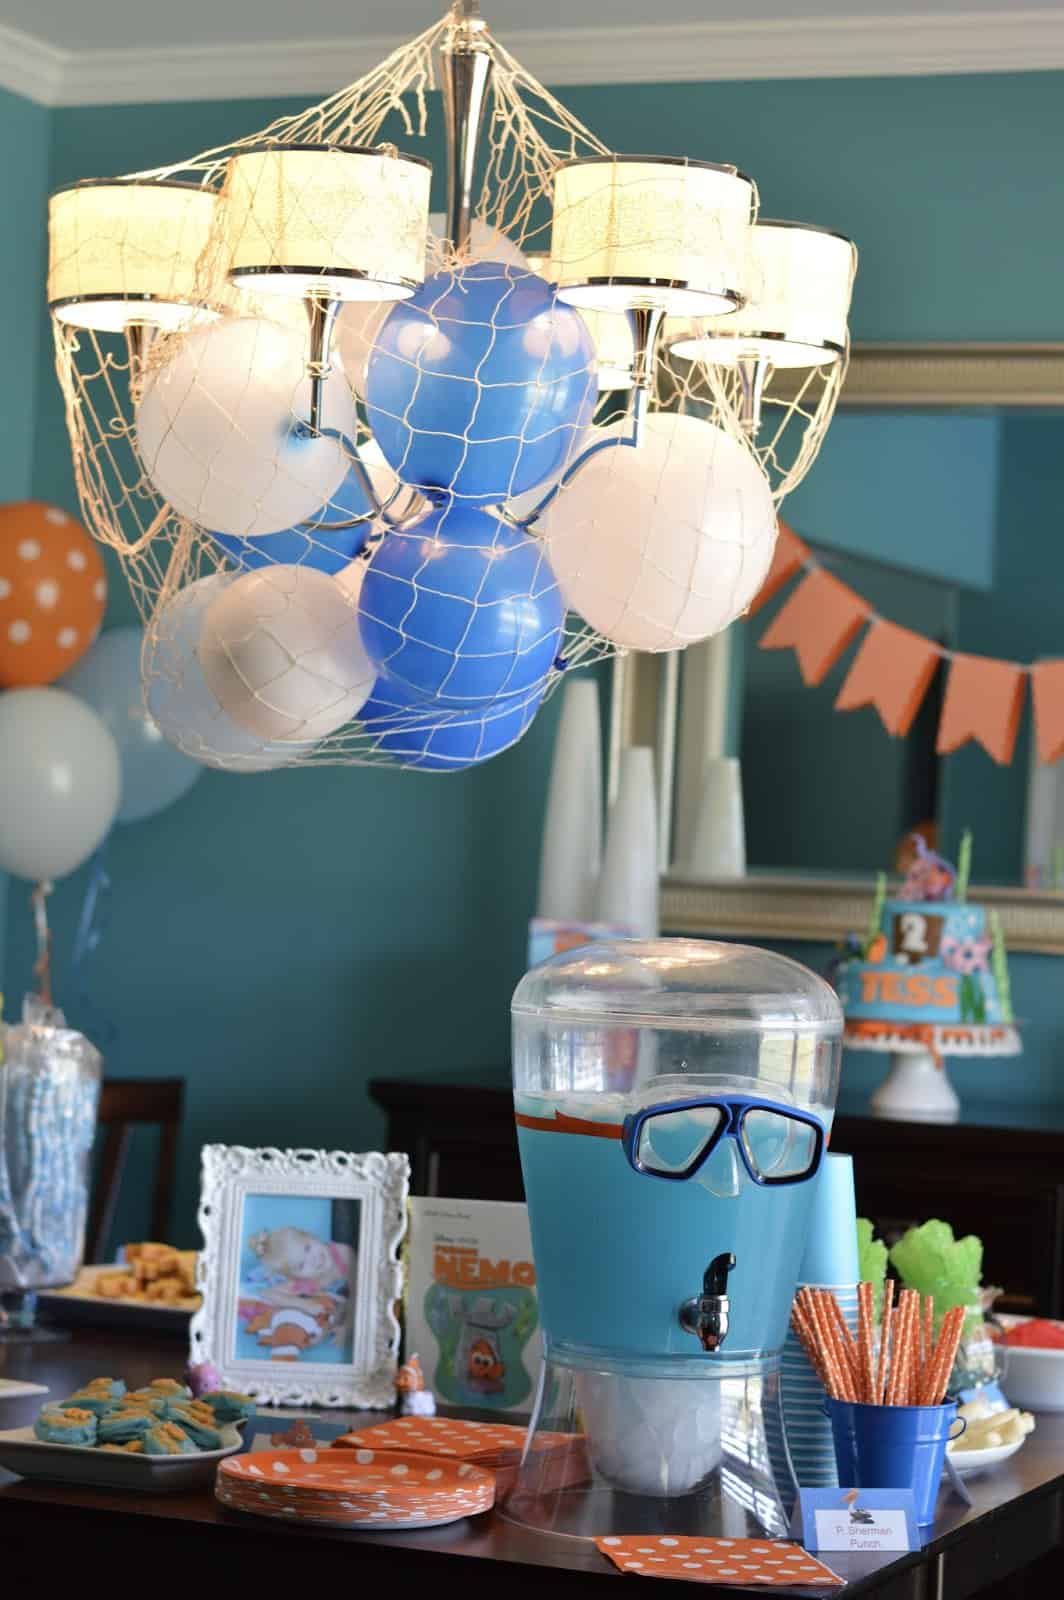 Finding Nemo birthday party